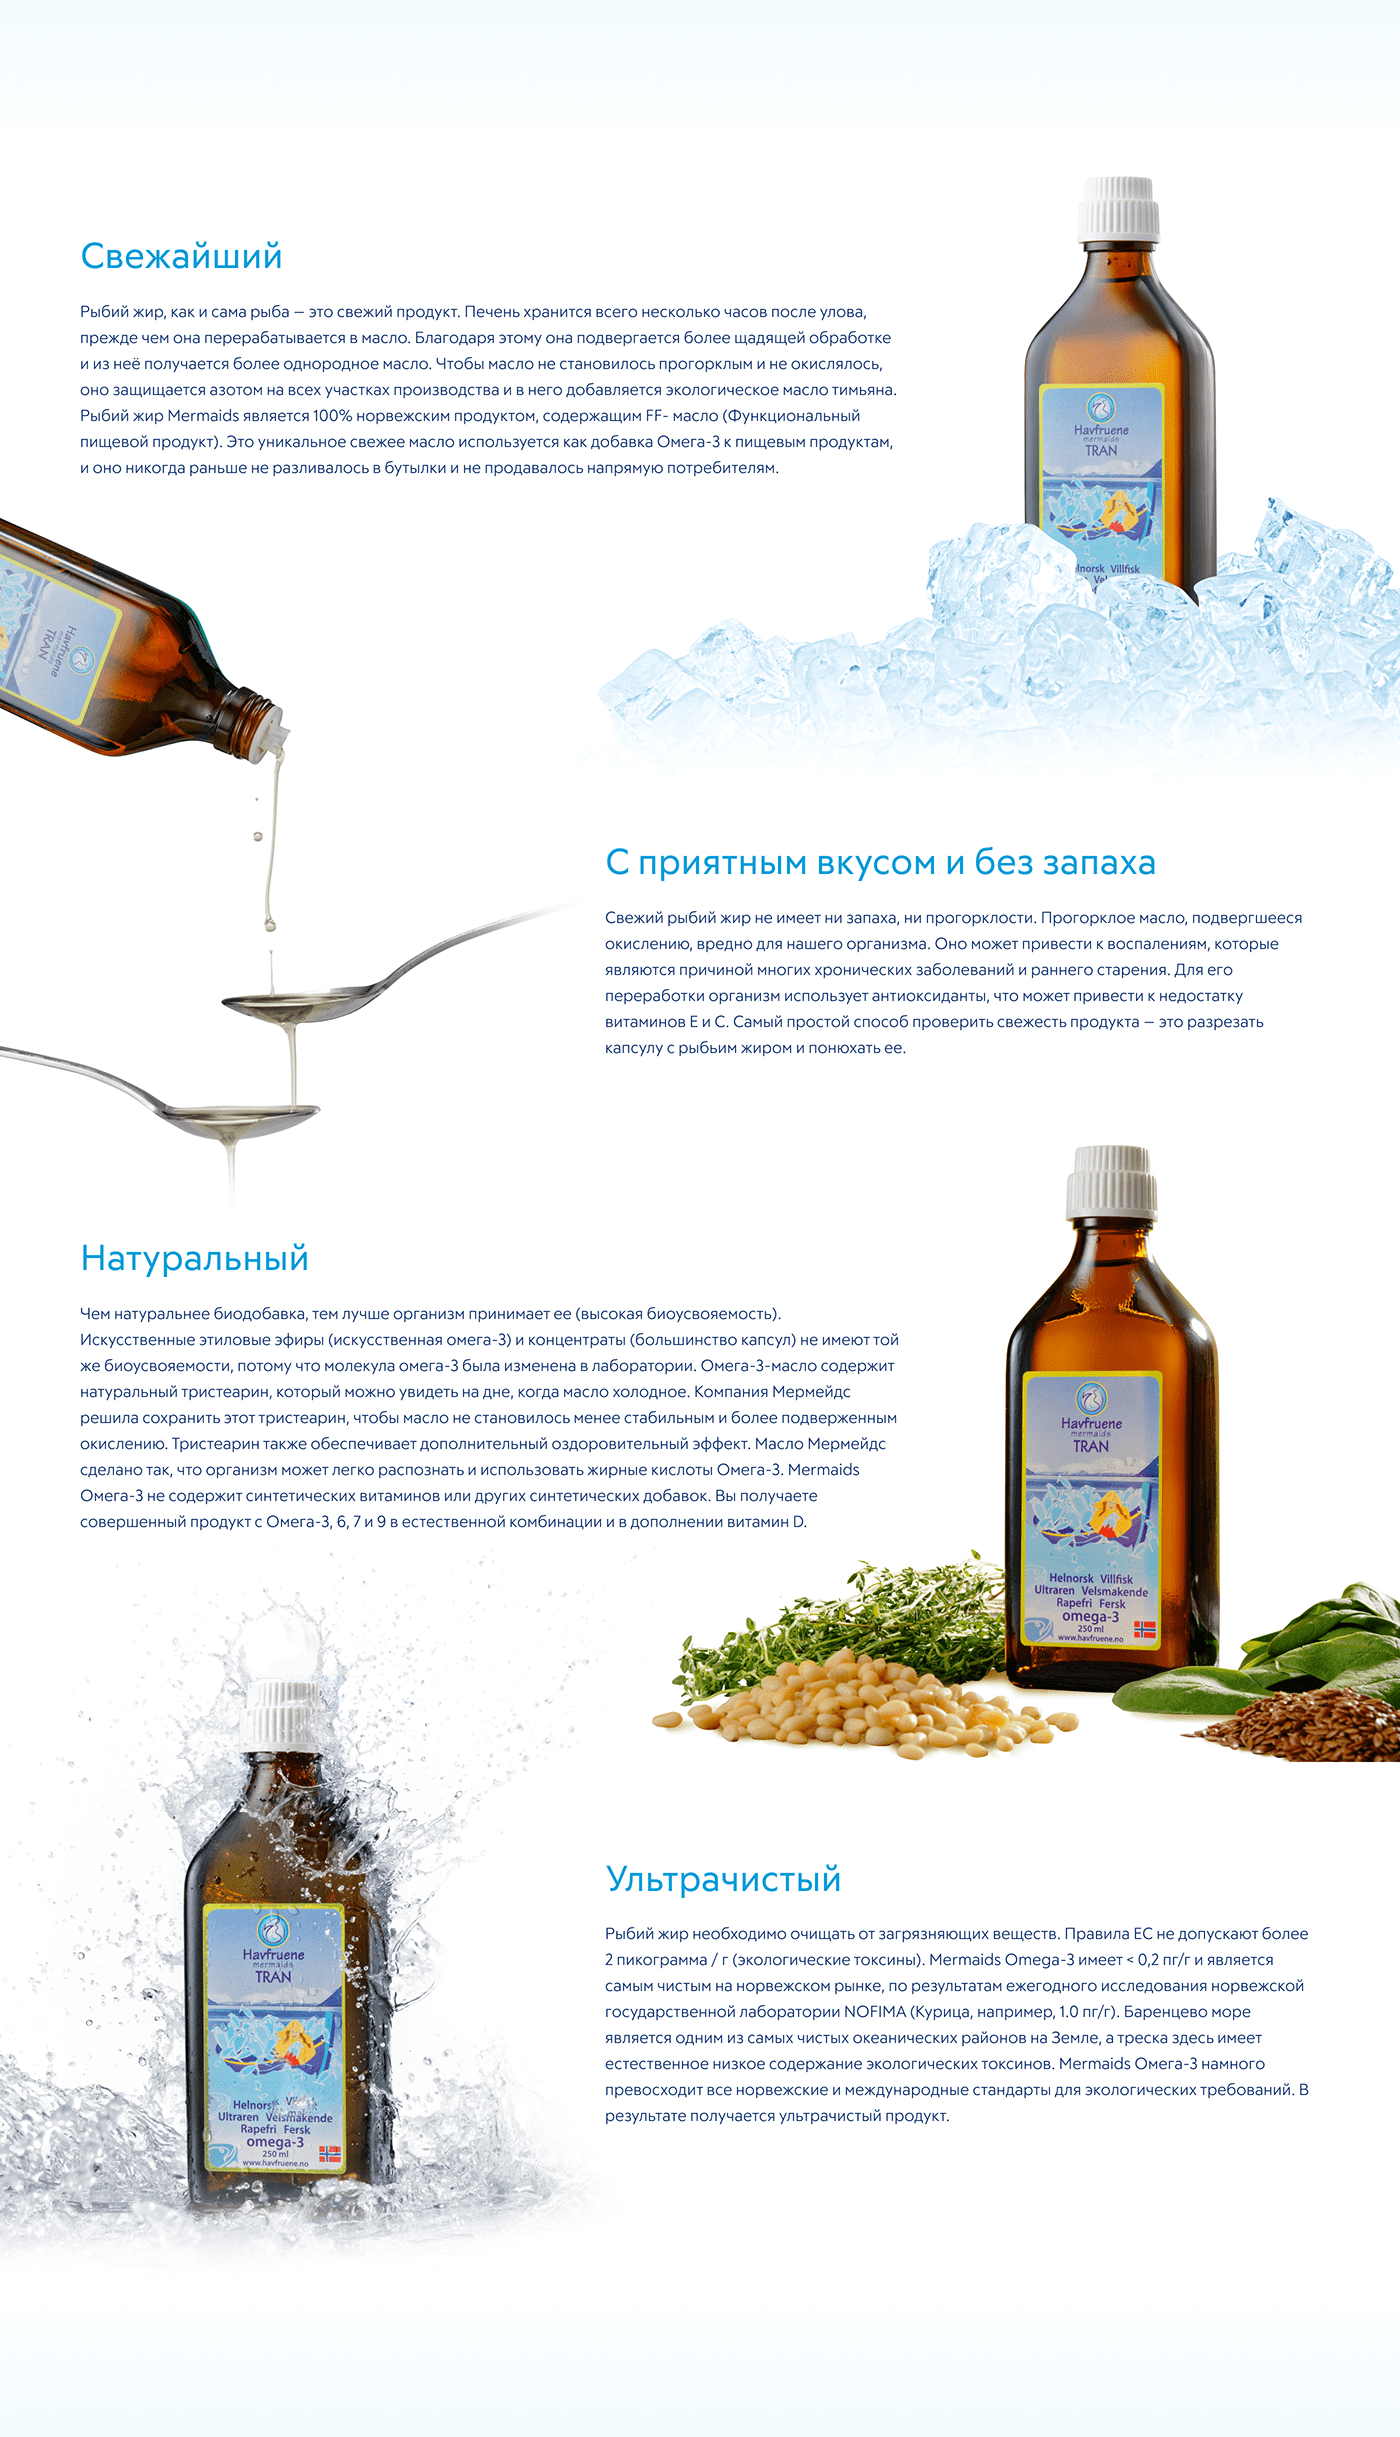 collagen Fish oil norway omega-3 Web Design  Коллаген рыбий жир natural Organic product натуральные продукты